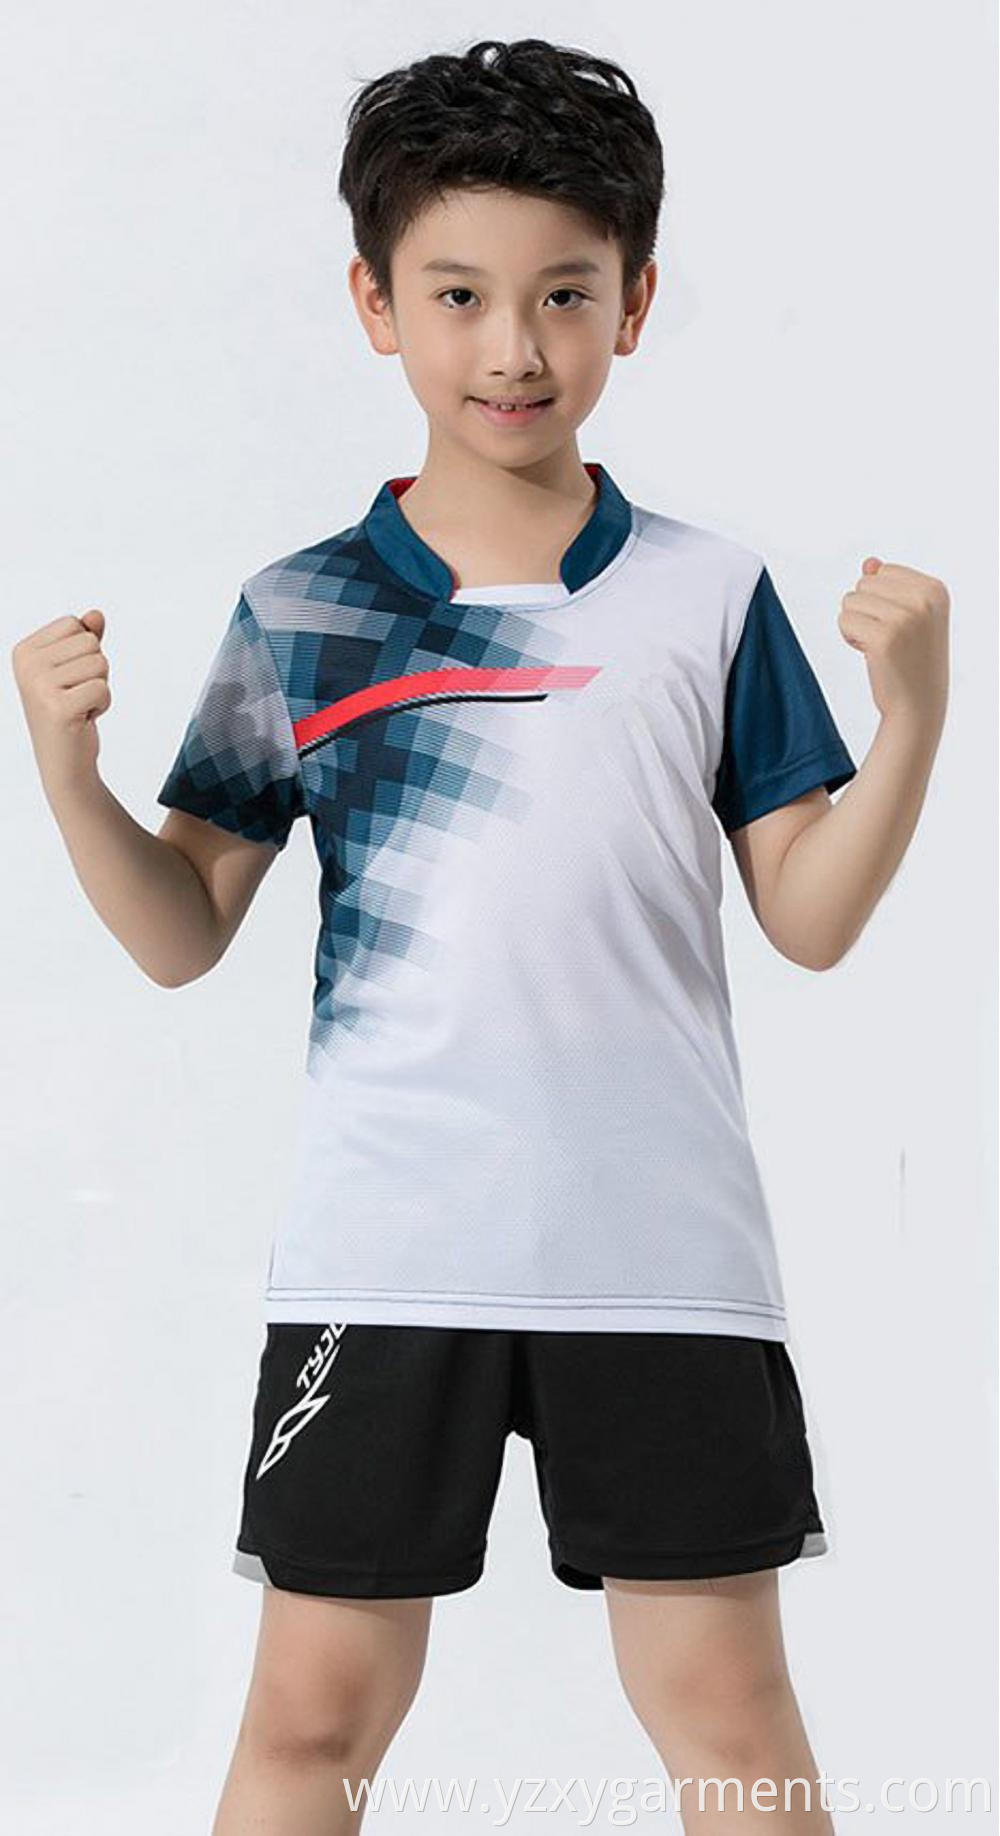 Badminton shirt